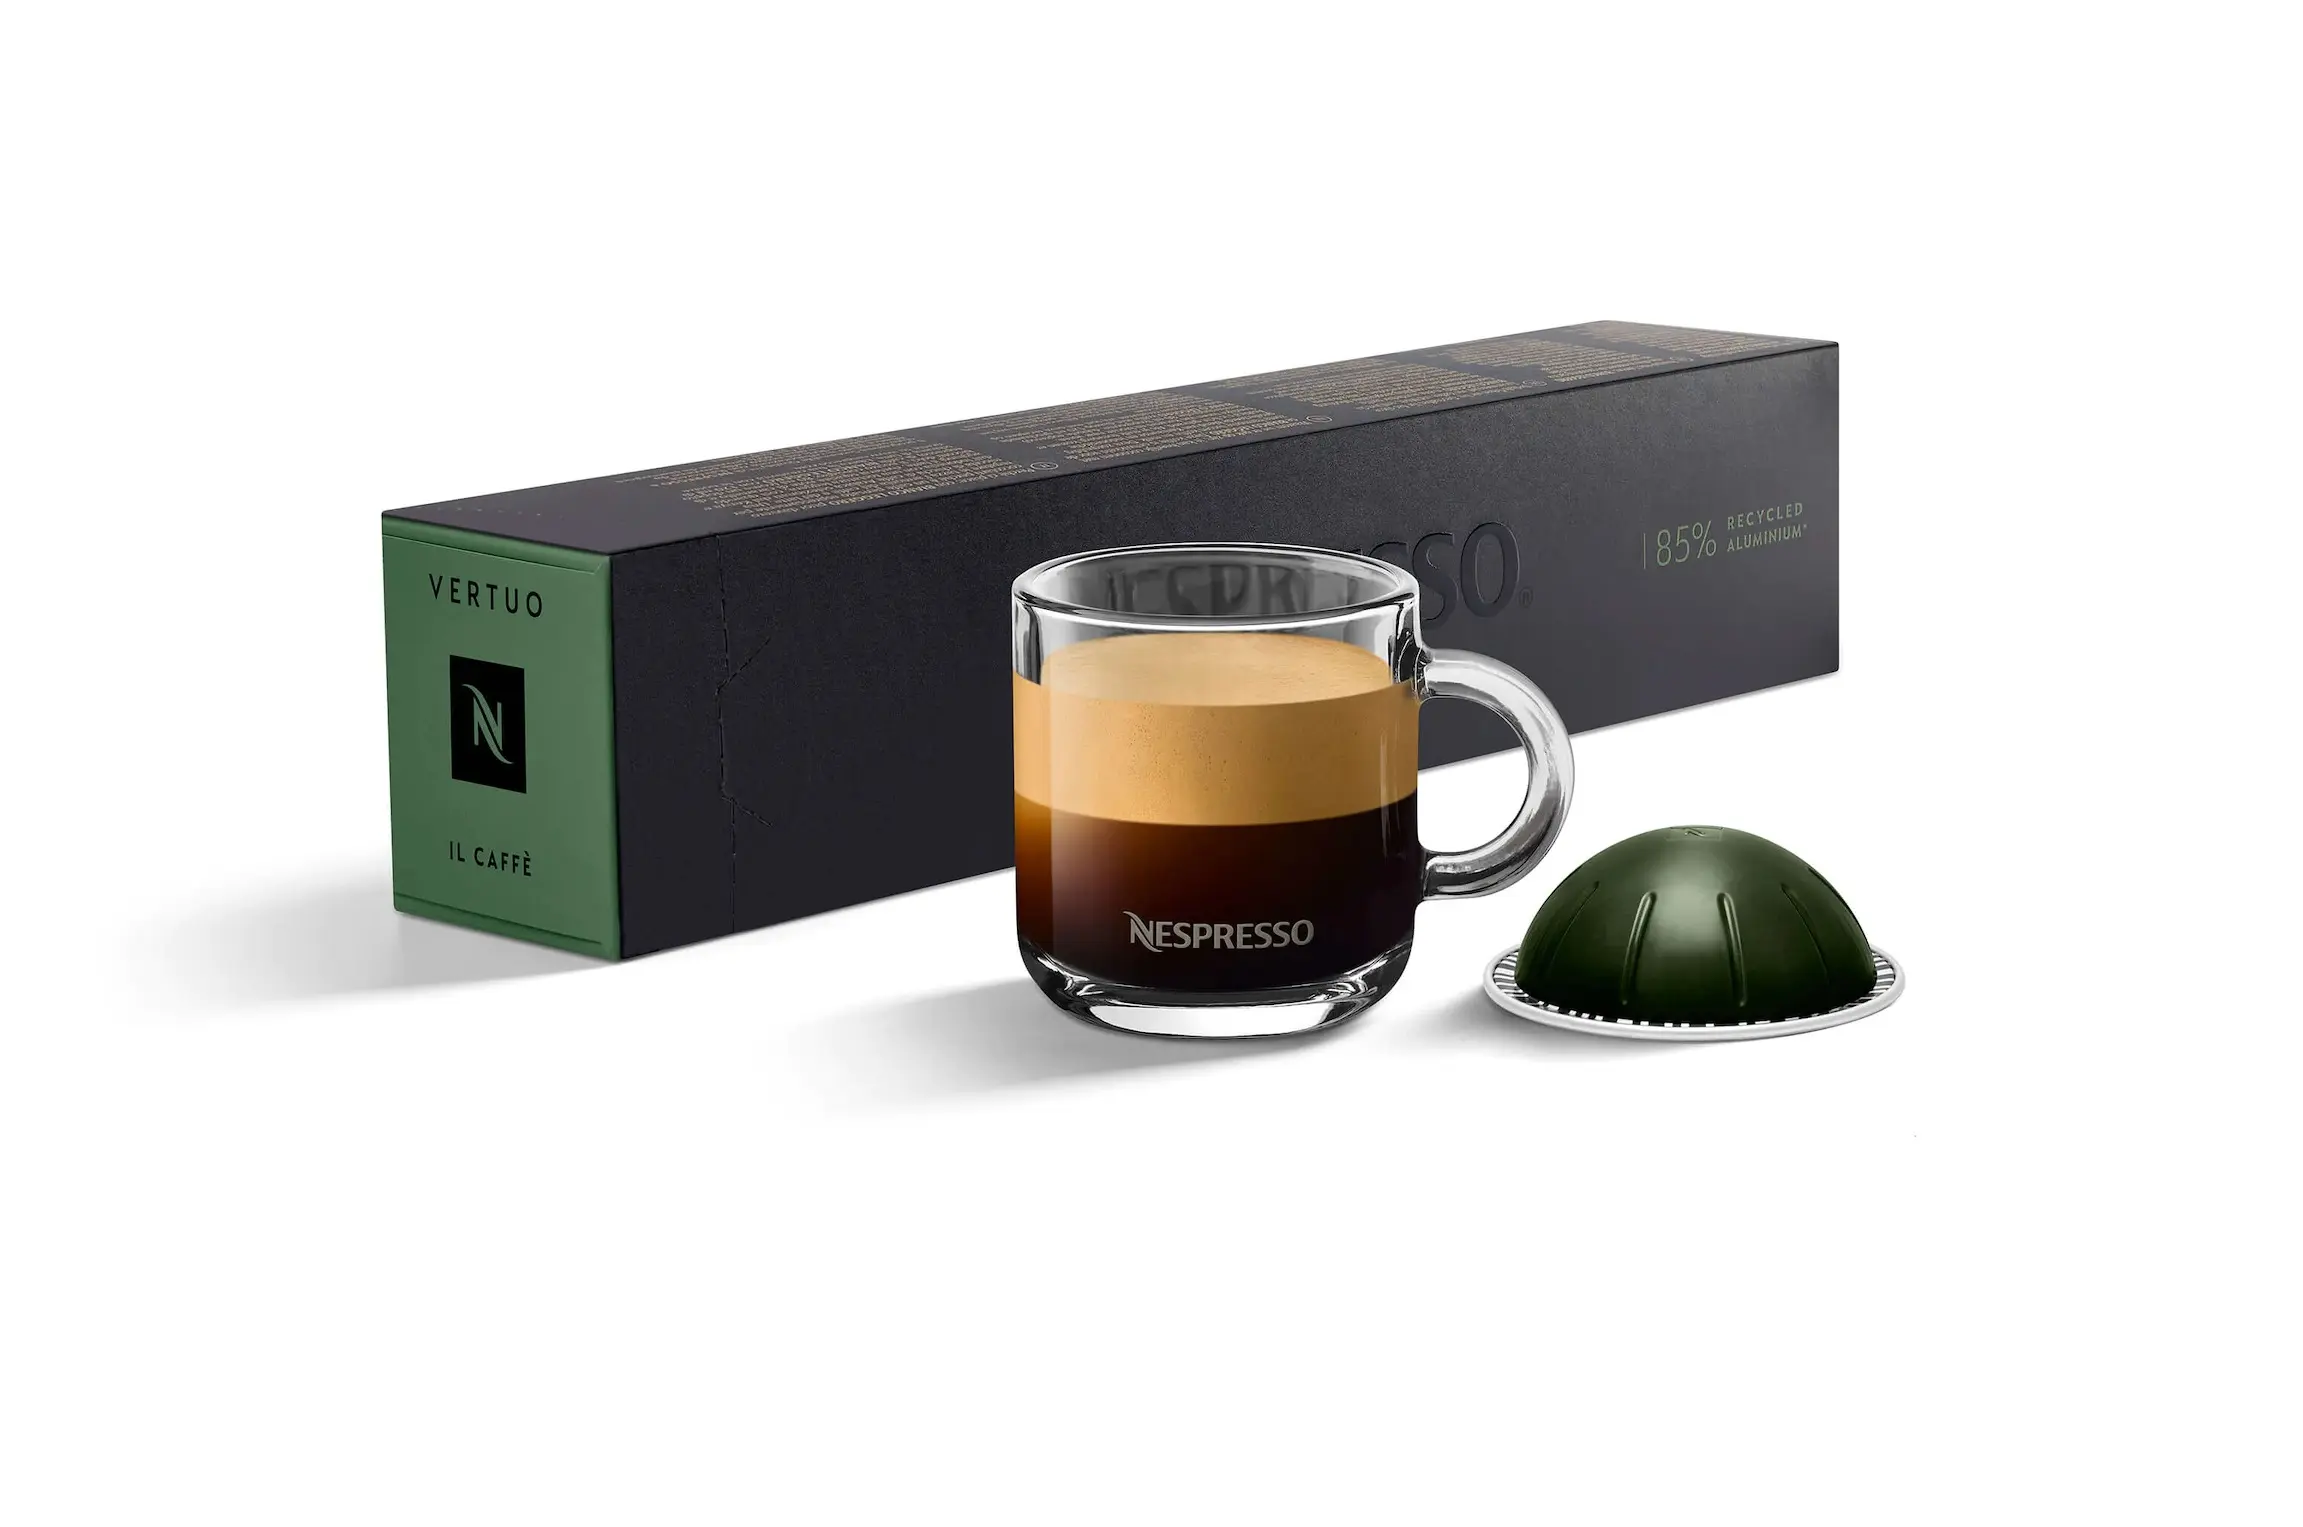 Nespresso: Buy 80-Ct Original / Vertuo Coffee Pods, Get 2 10-Ct Sleeves Free